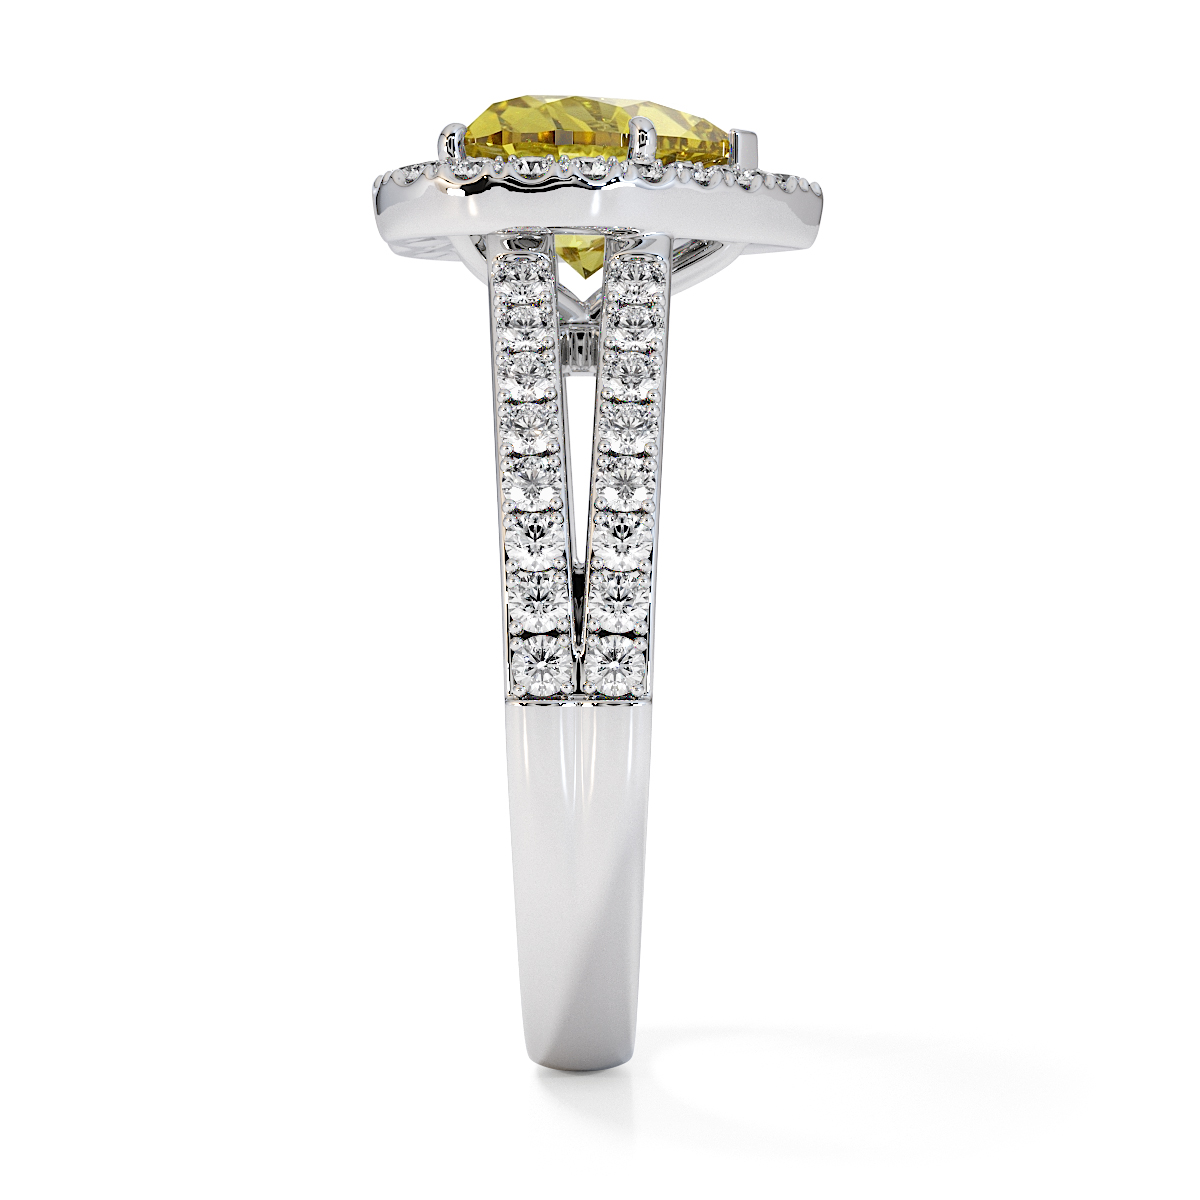 Gold / Platinum Yellow Sapphire and Diamond Engagement Ring RZ3467